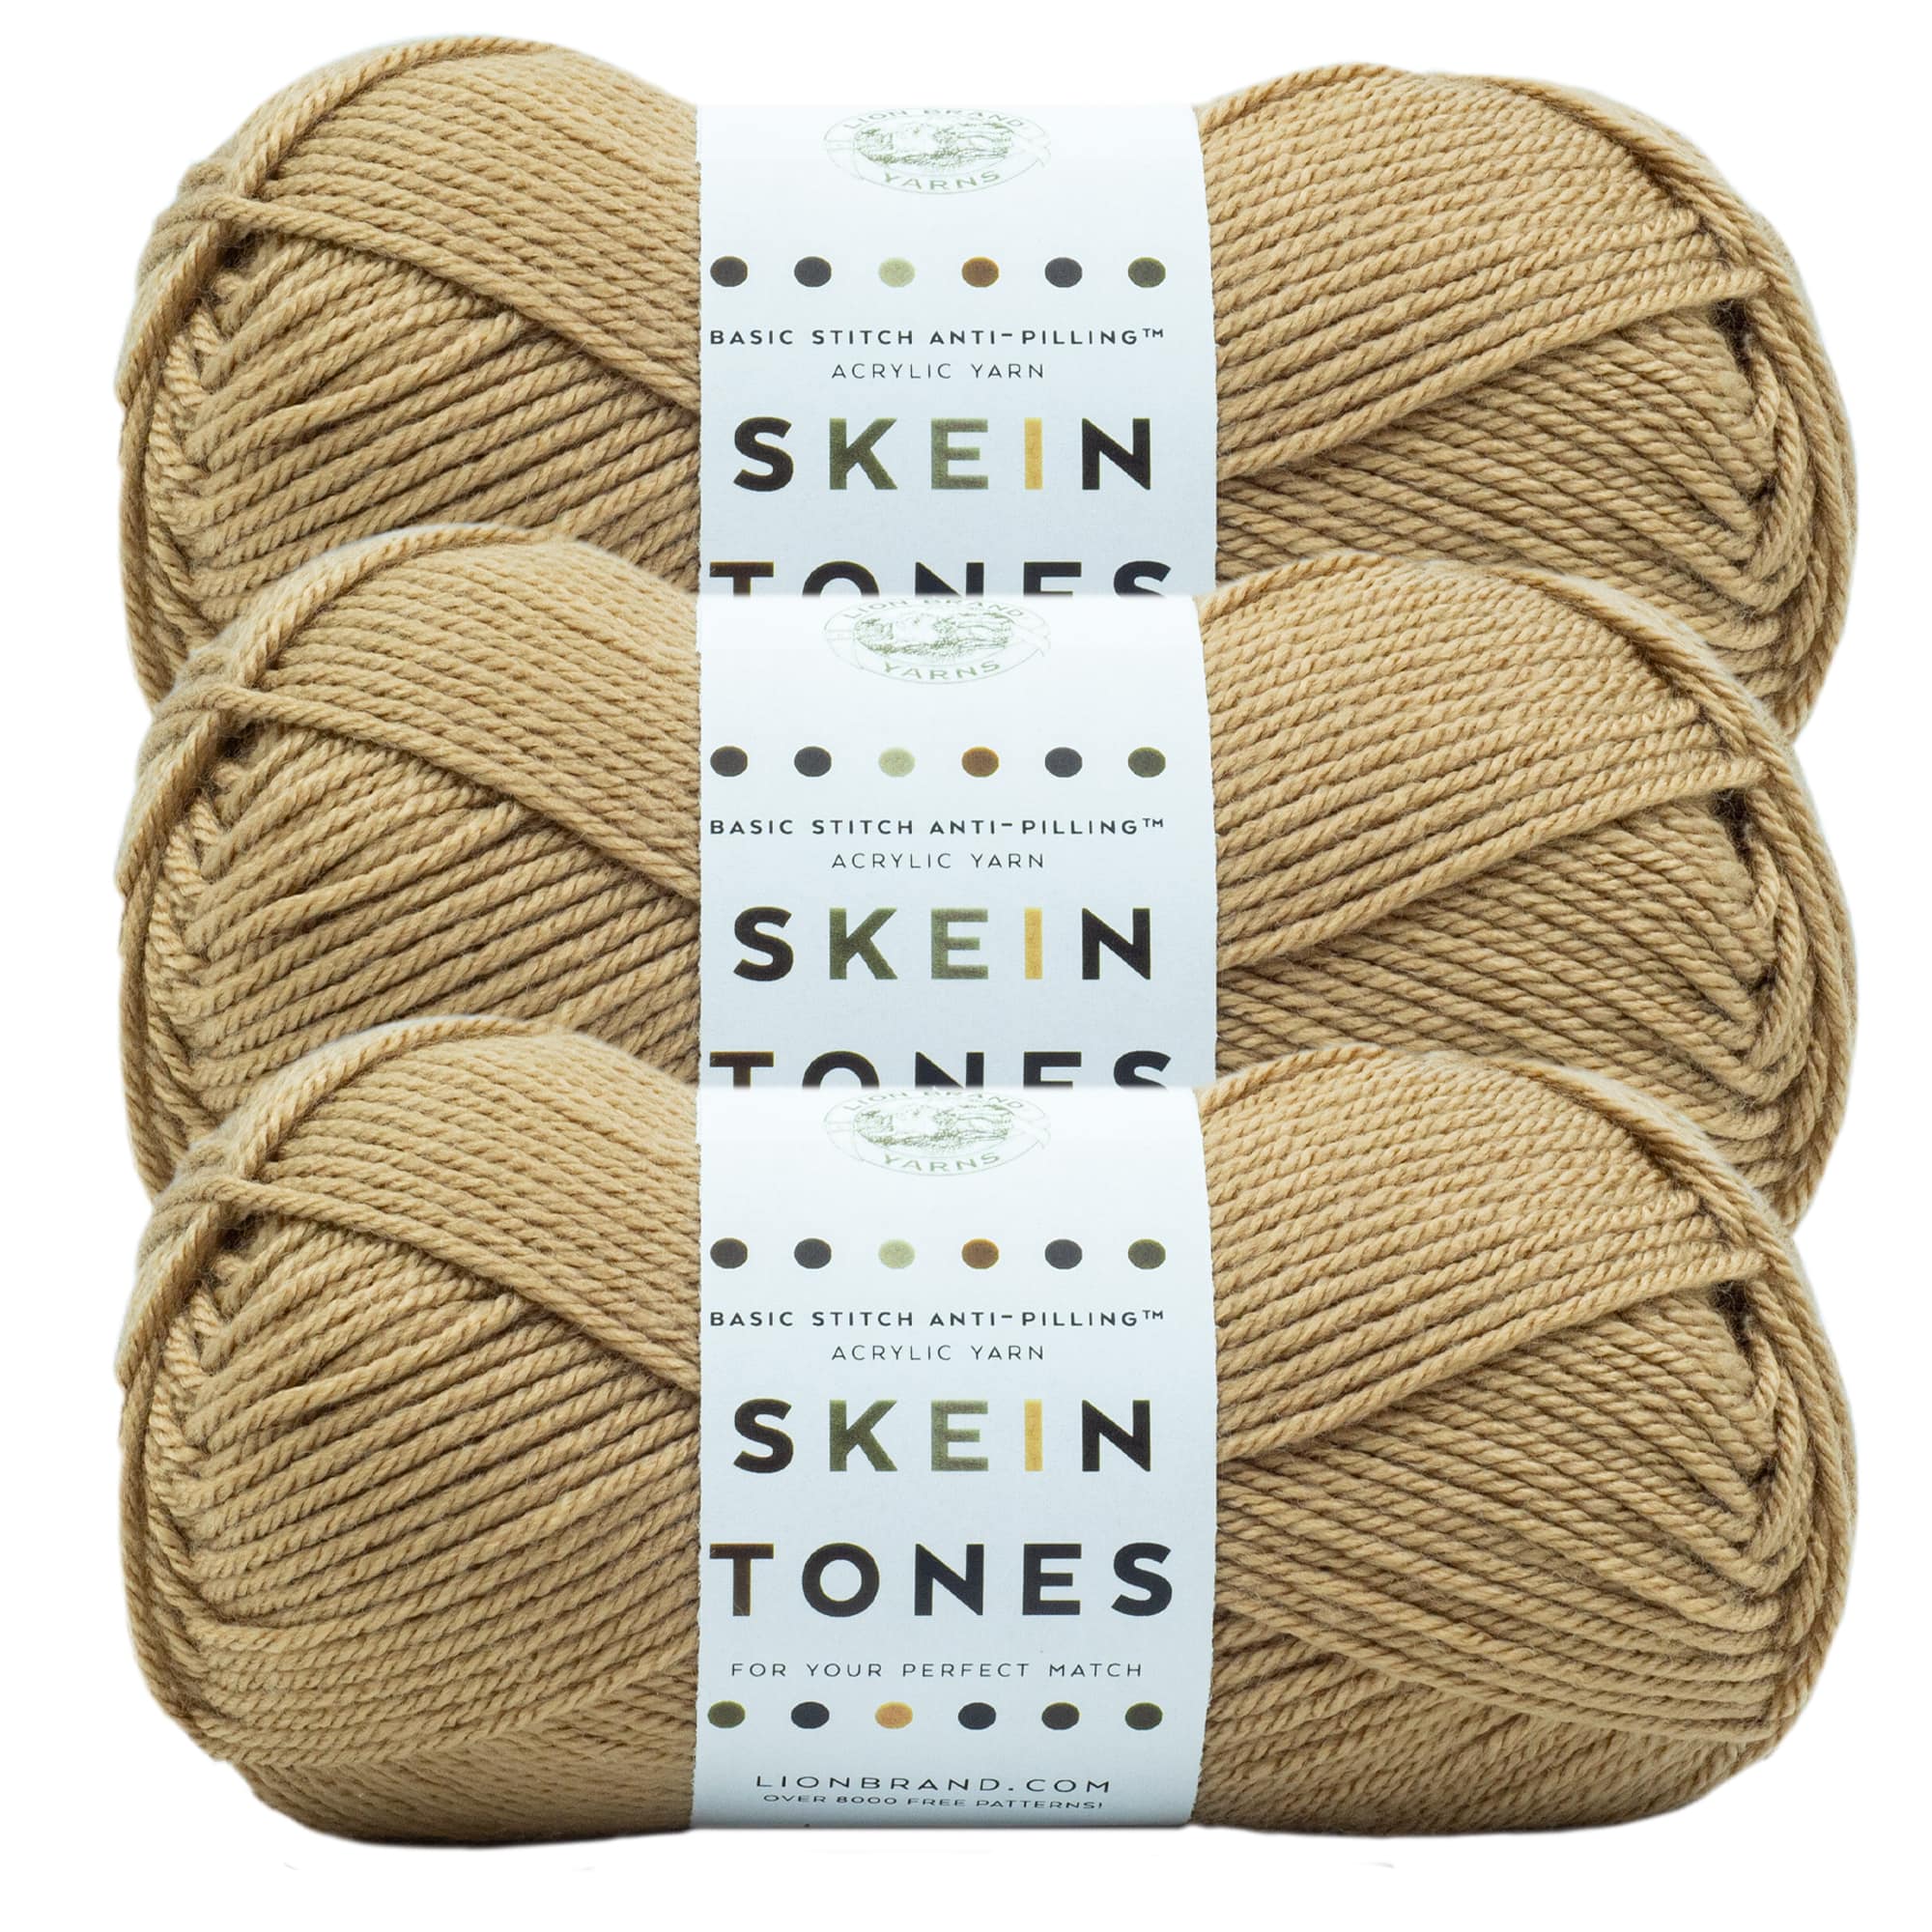 Skein Tones Bundle - Basic Stitch Anti Pilling™ Yarn